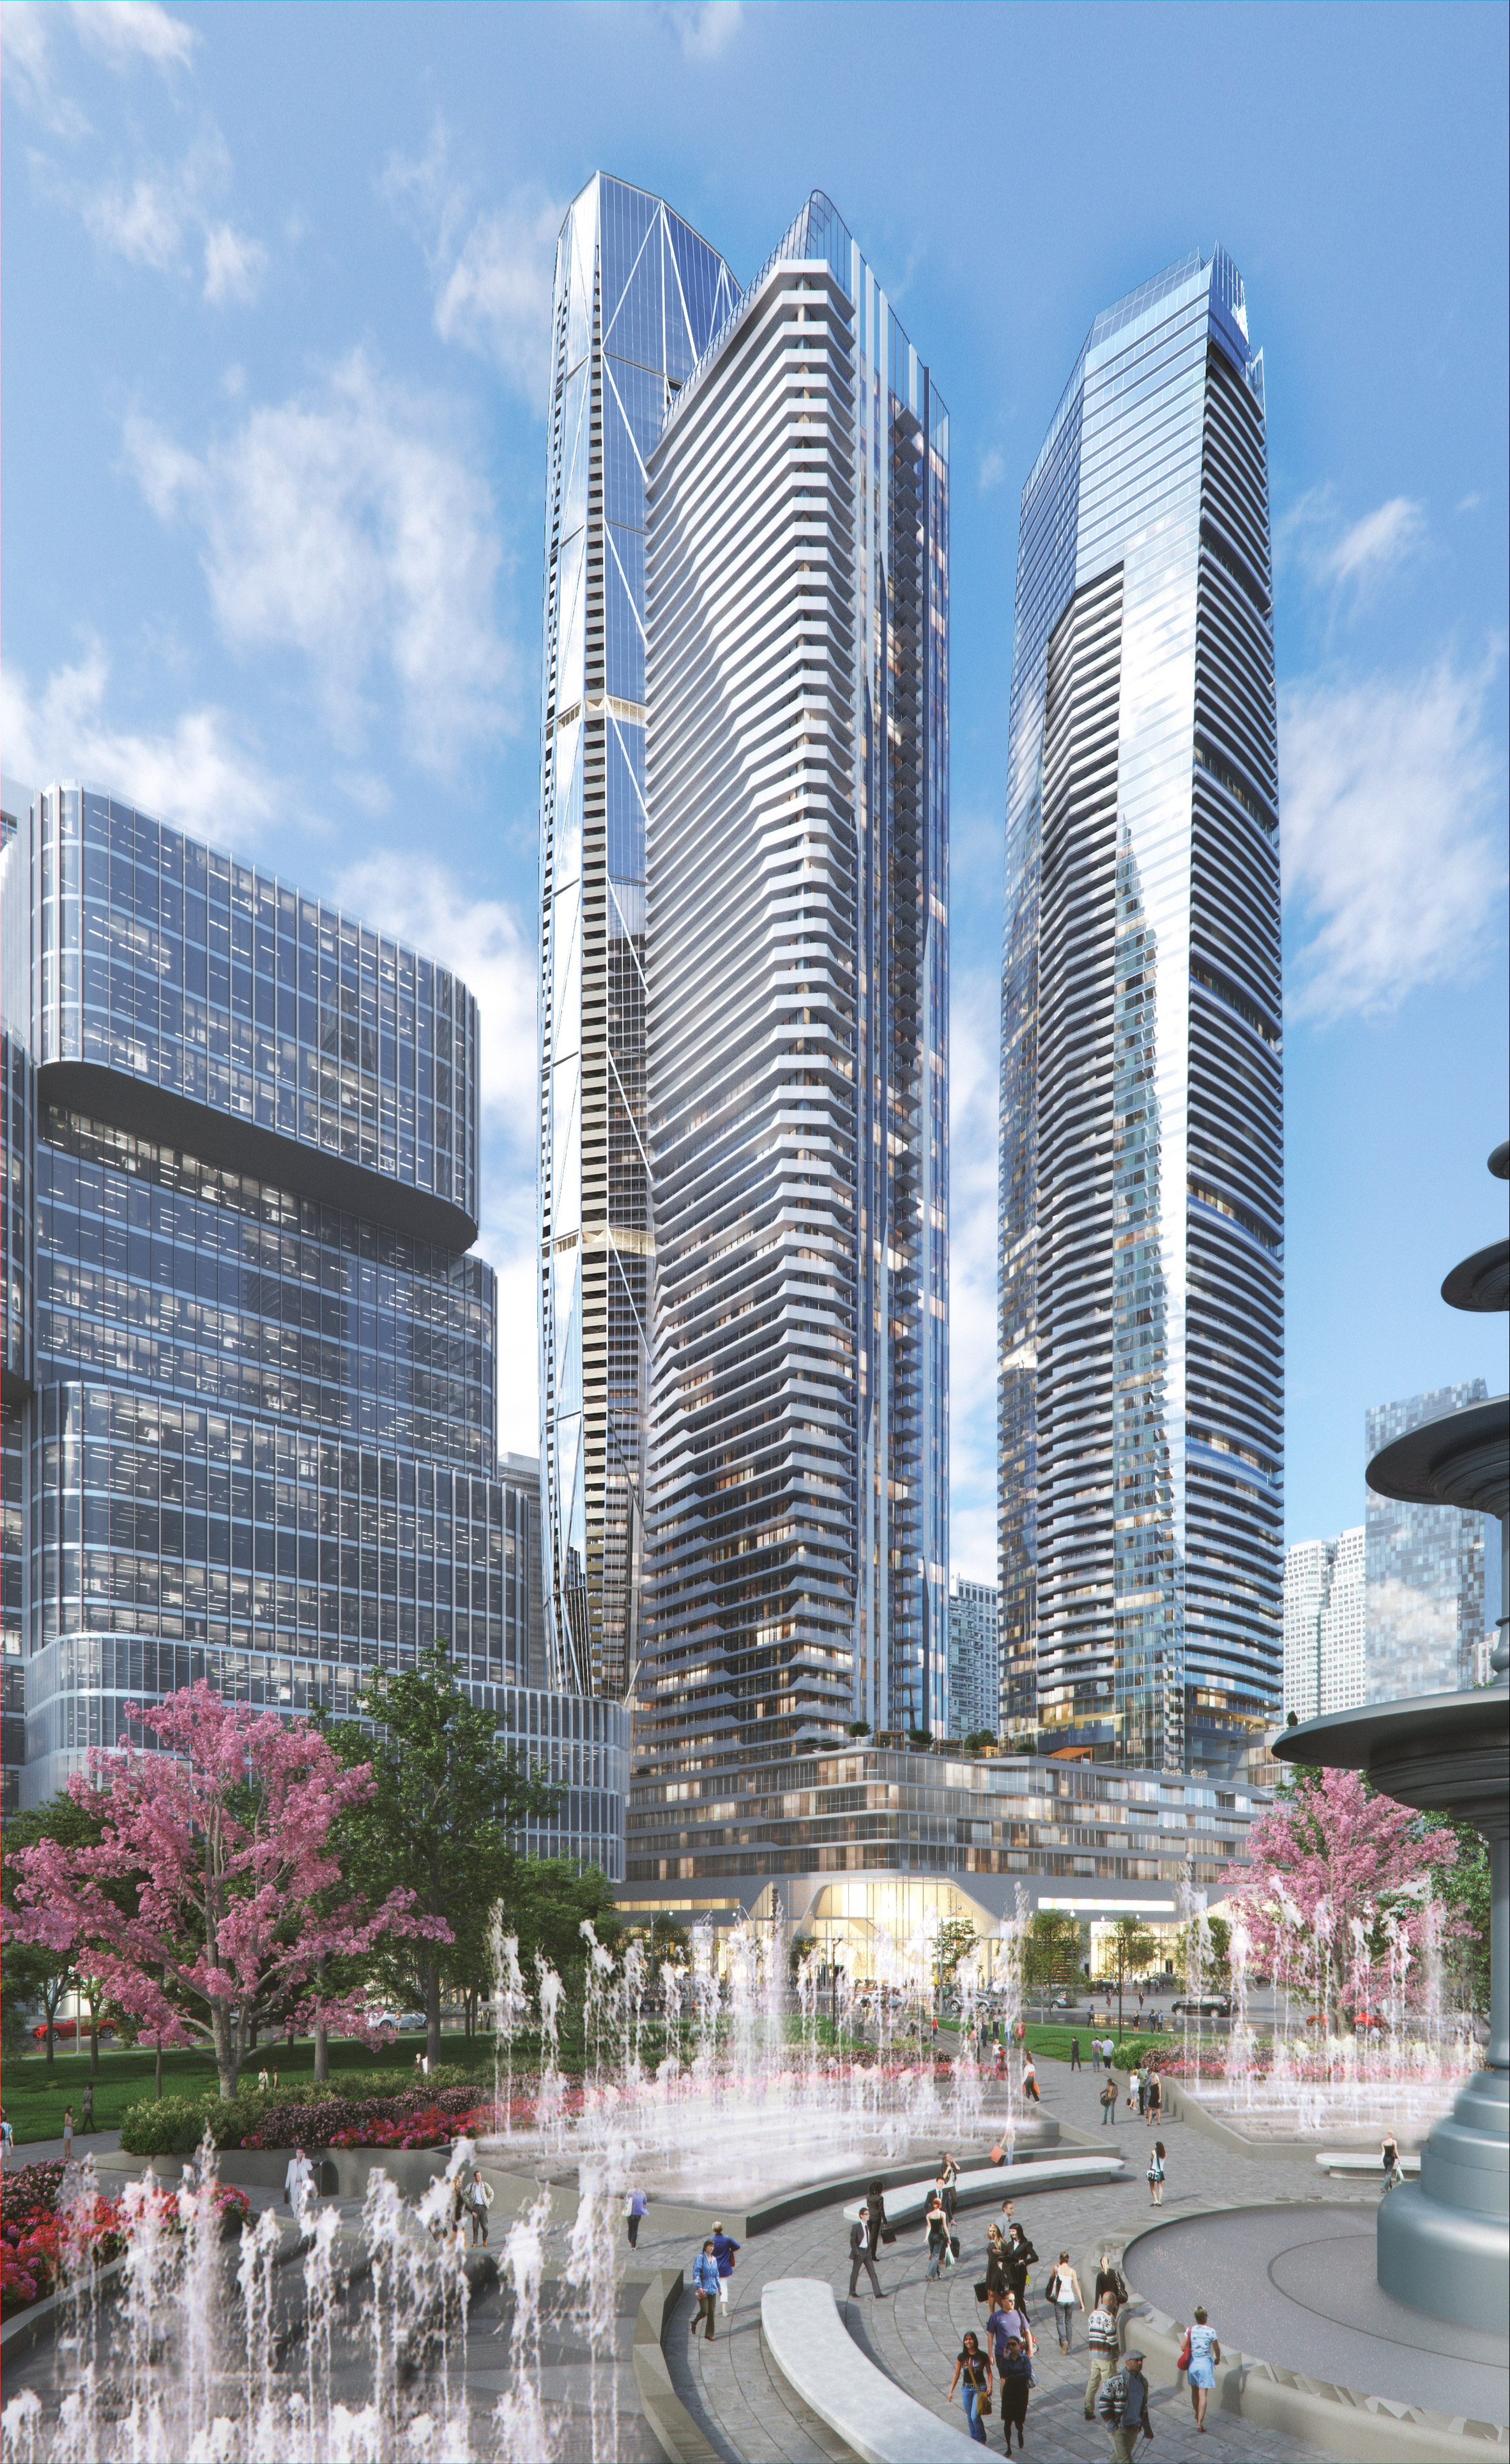 Hariri Pontarini and Pinnacle propose tower trio for Toronto waterfront